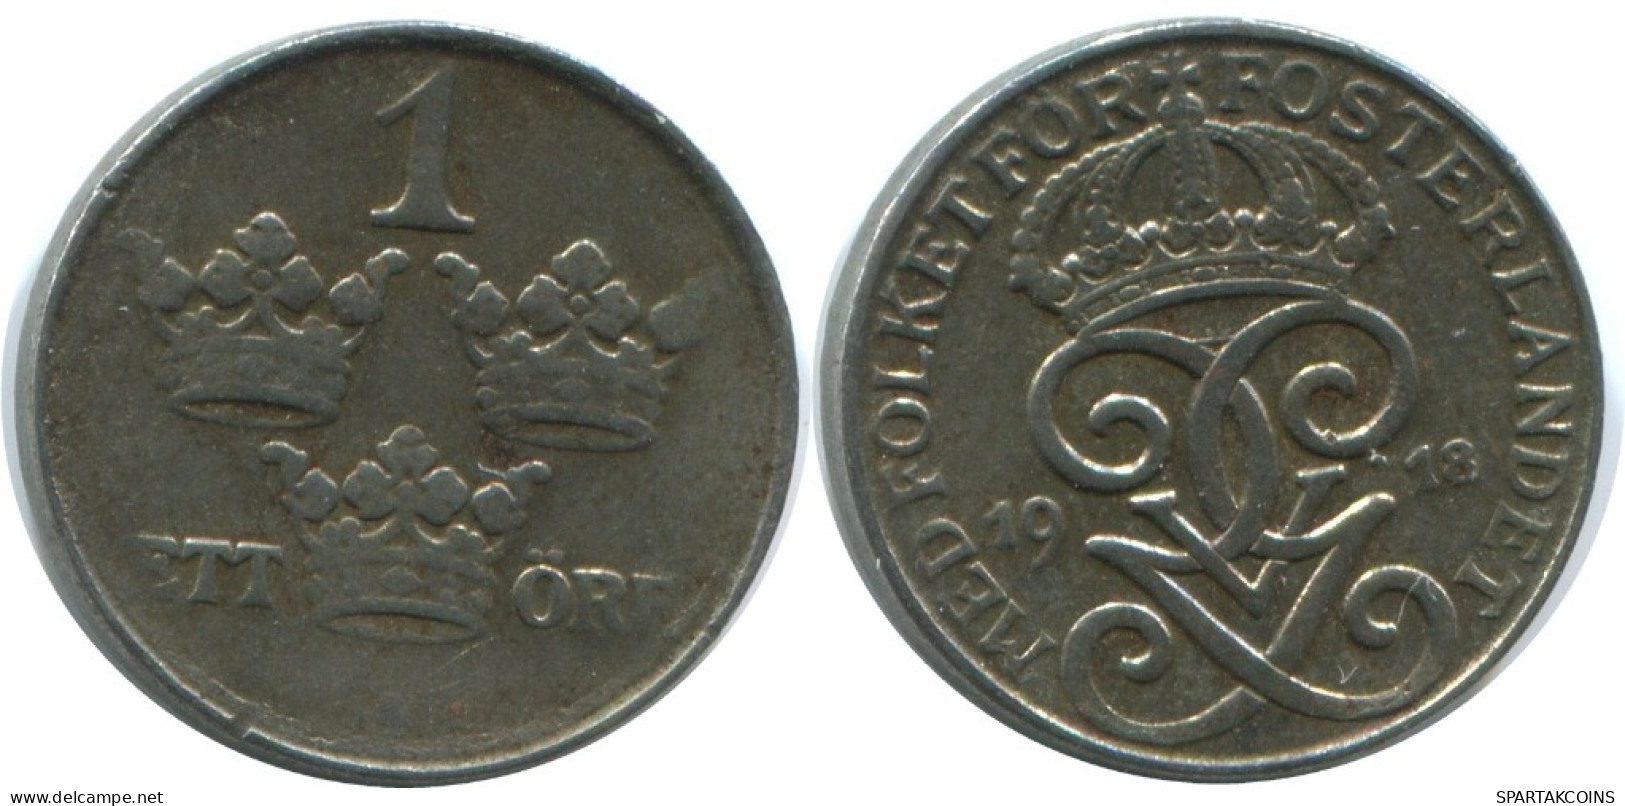 1 ORE 1918 SWEDEN Coin #AC537.2.U.A - Sweden